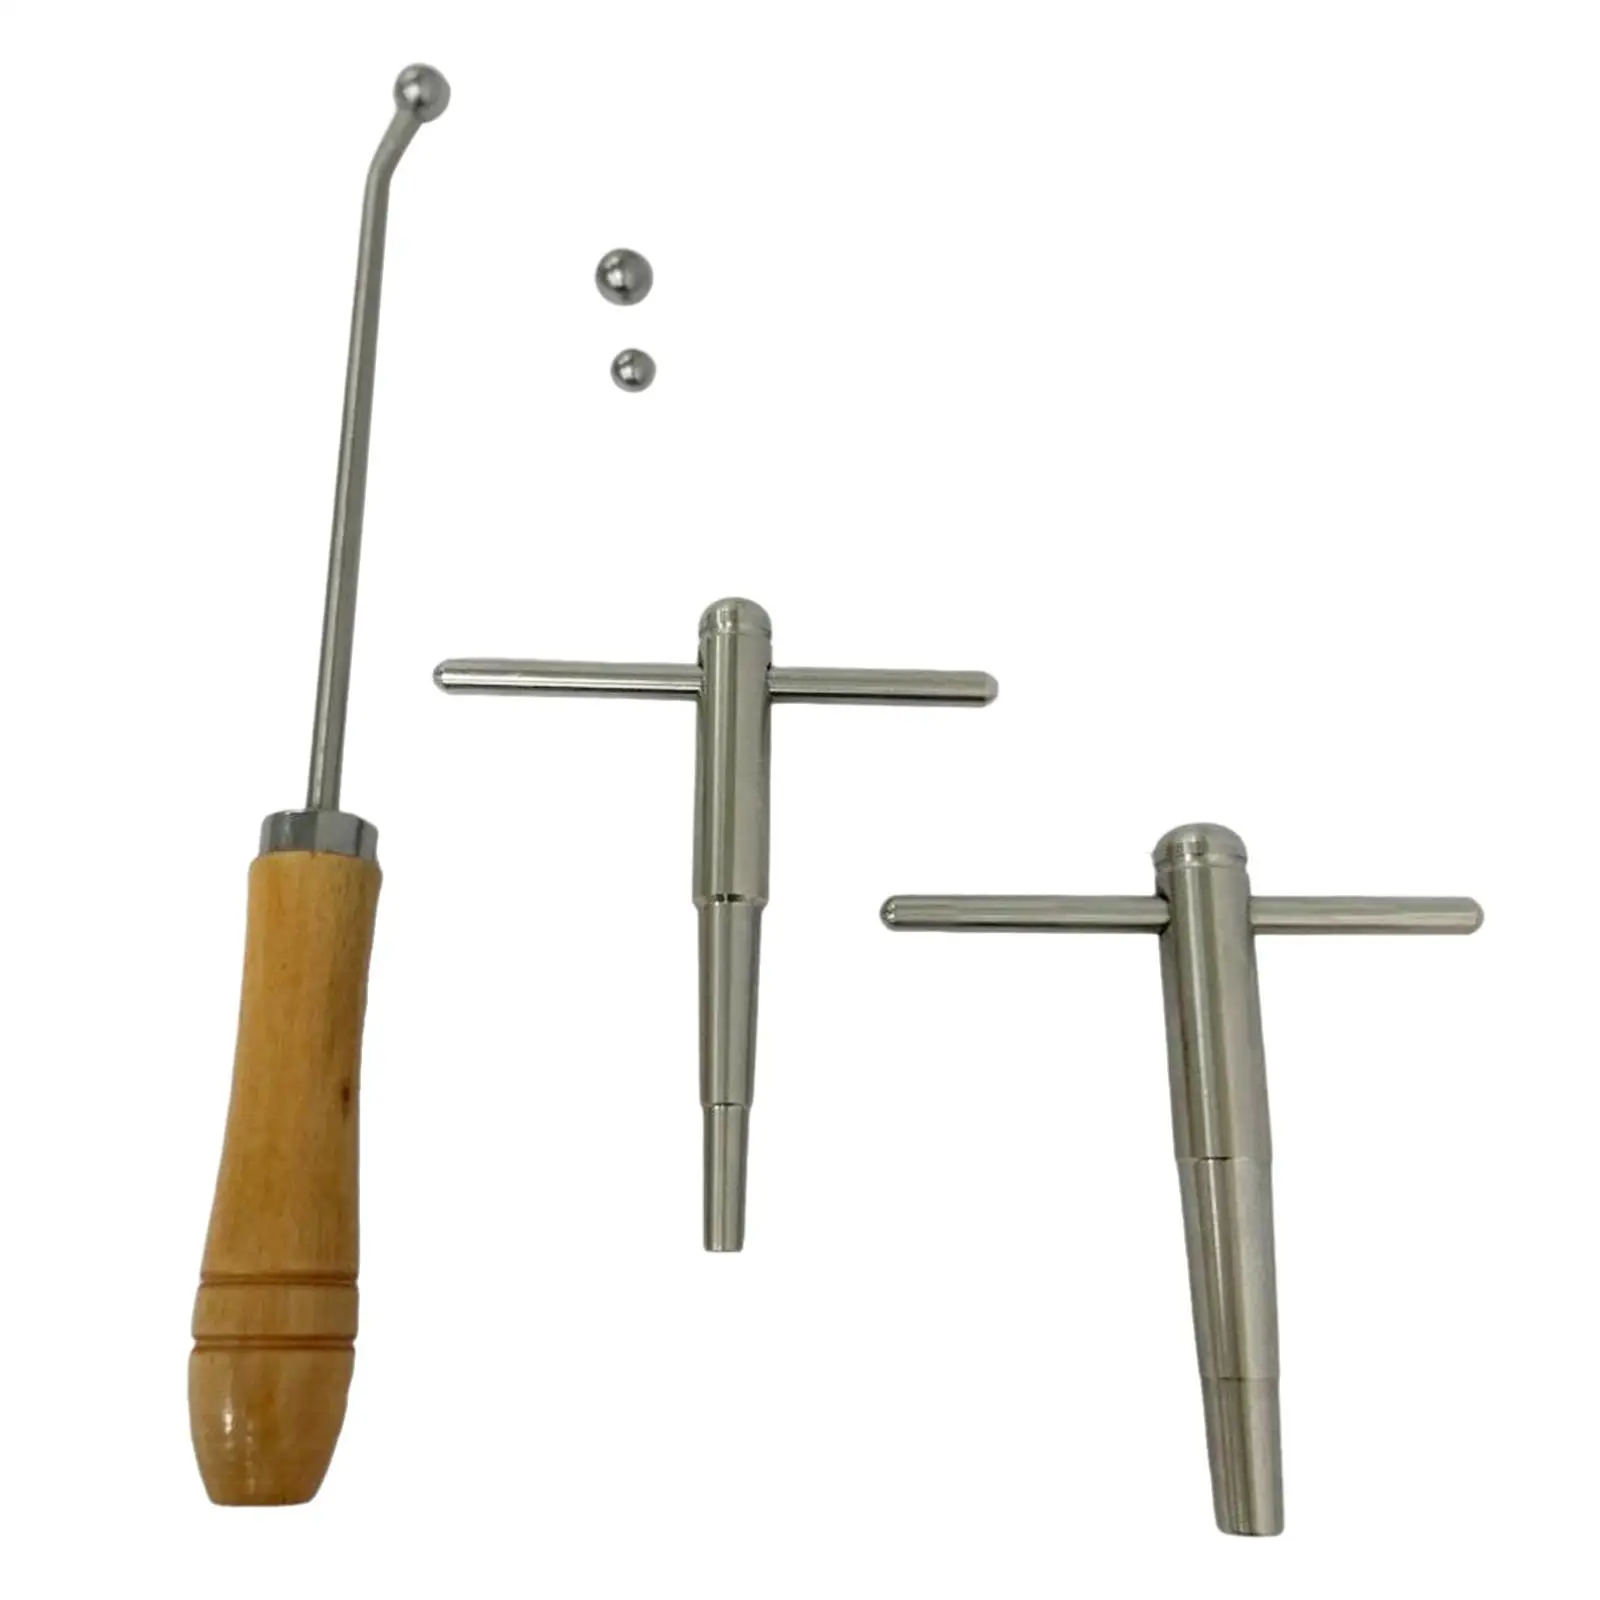 Trumpet Repair Handle Wood Handle Portable with Repair Wrench Trumpet Repair Tools for Trumpet